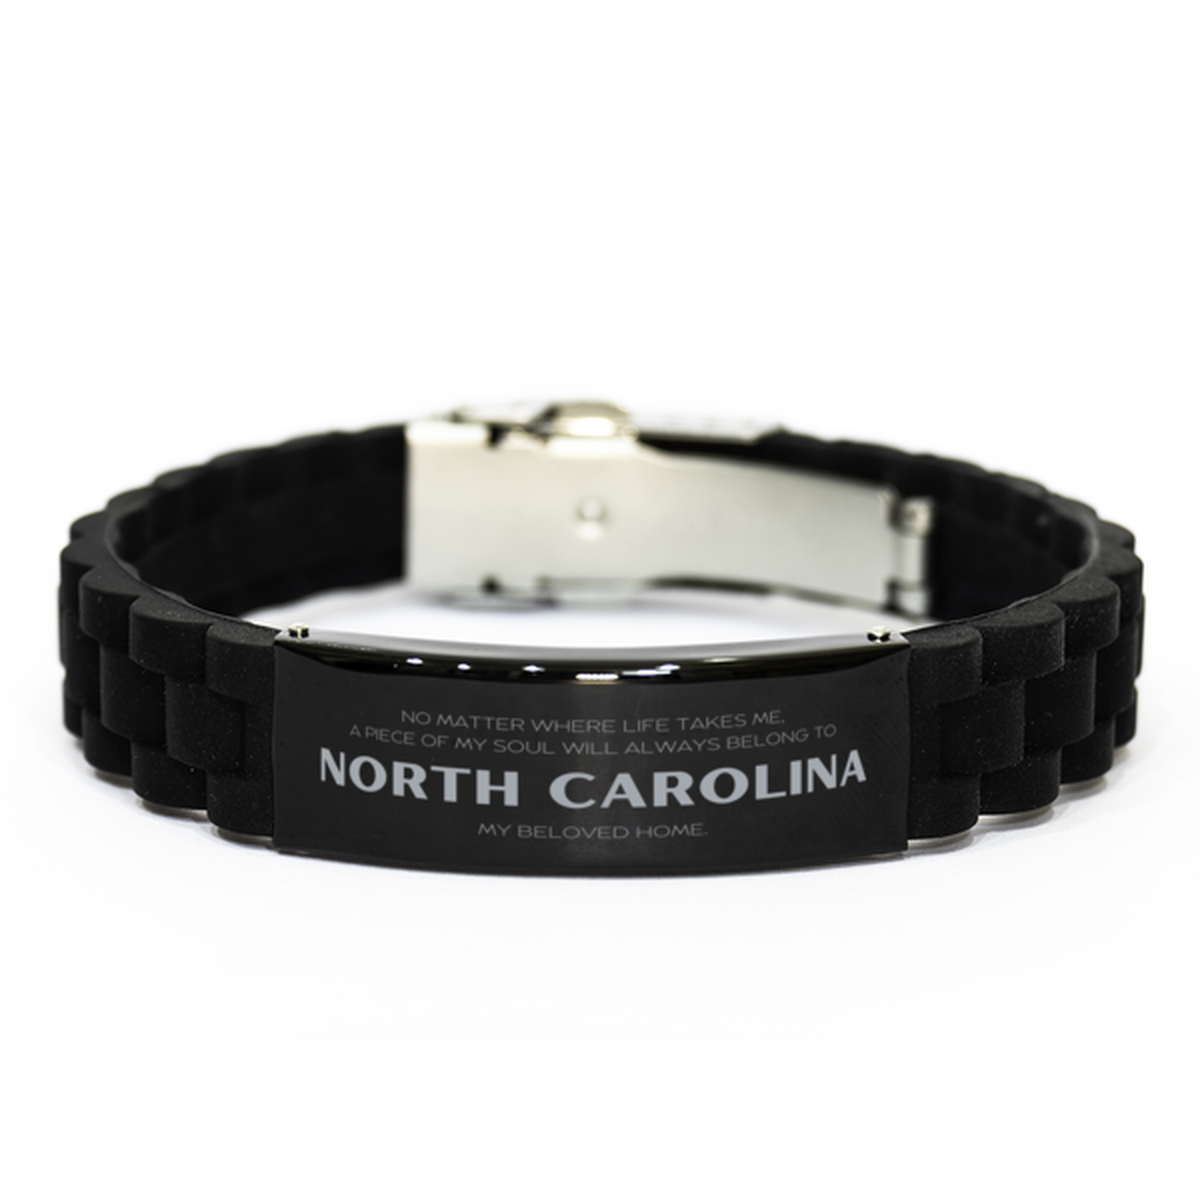 Love North Carolina State Gifts, My soul will always belong to North Carolina, Proud Black Glidelock Clasp Bracelet, Birthday Unique Gifts For North Carolina Men, Women, Friends